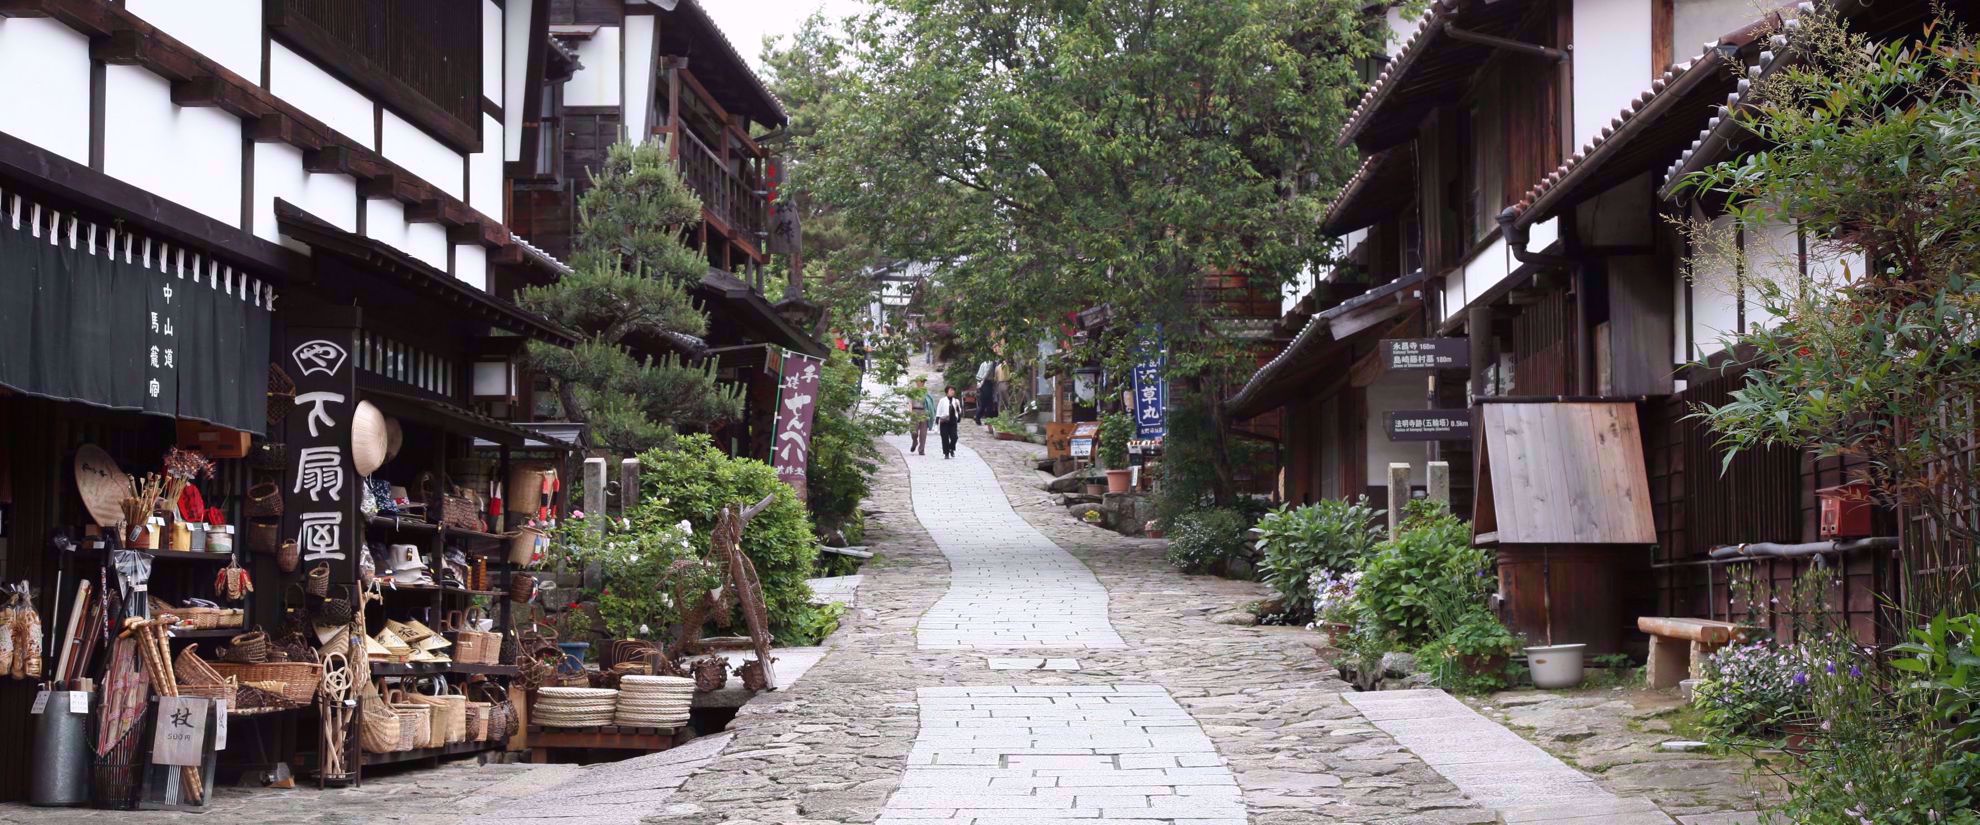 street in japan